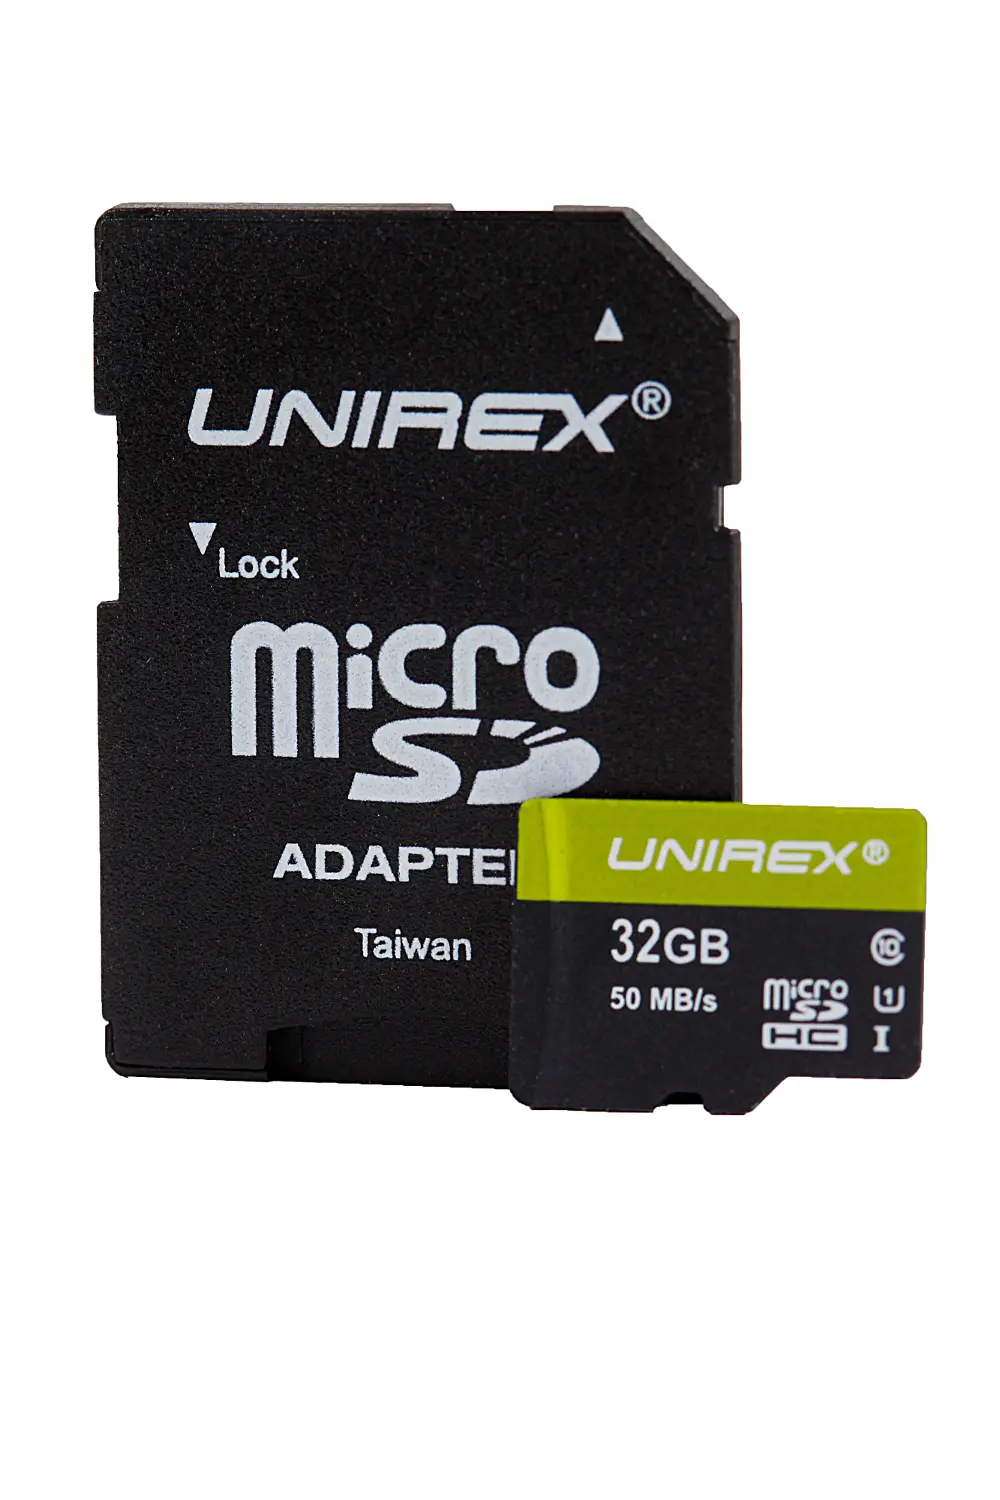 Unirex (UHS-1) Micro SD 32GB Memory Card-1